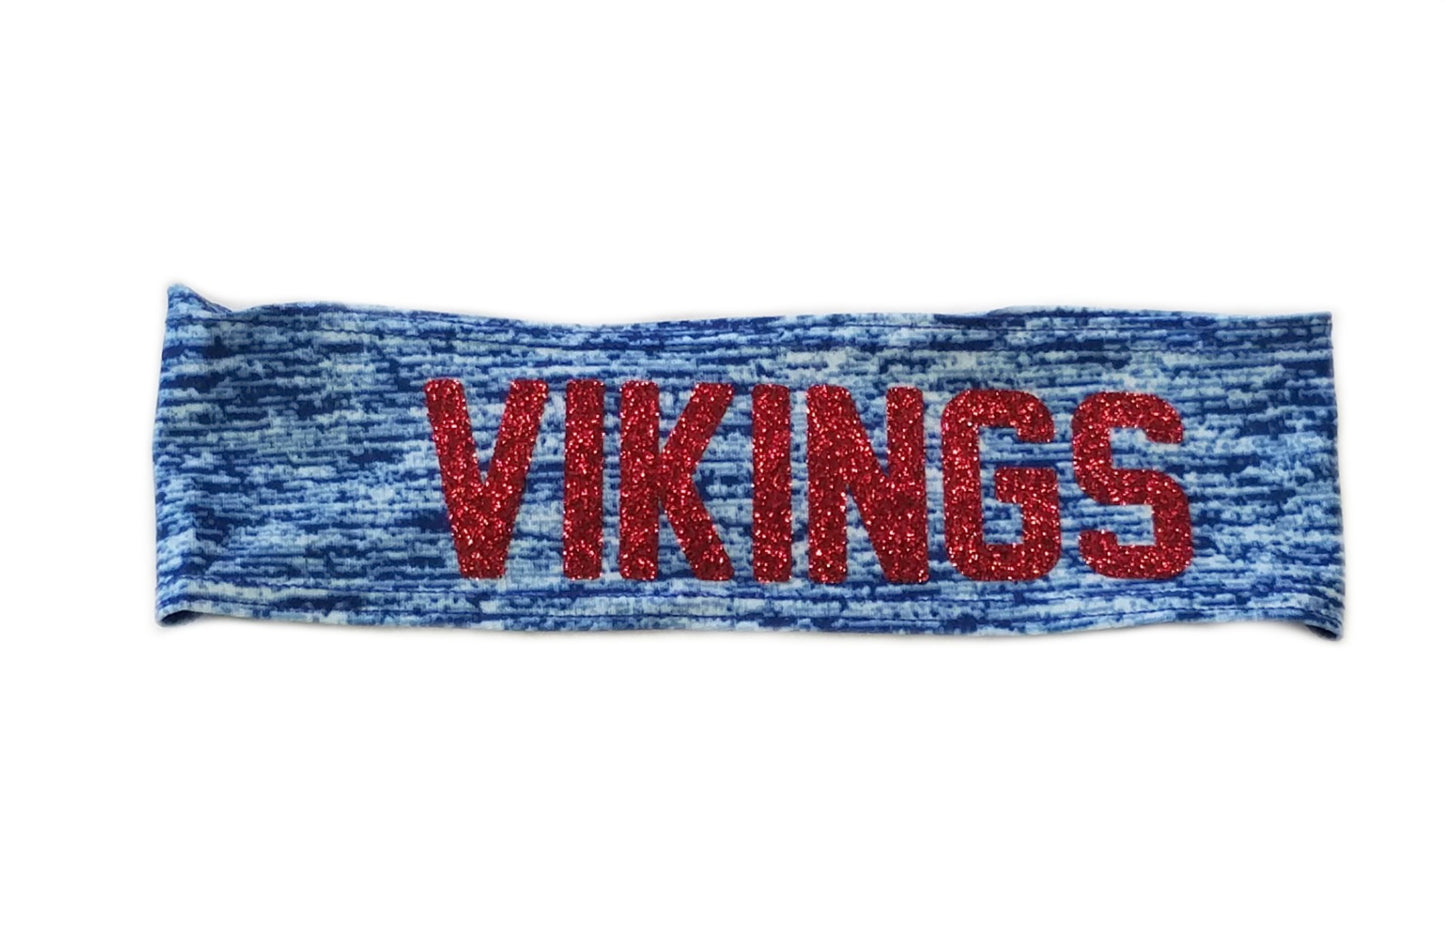 Viking Glitter Headband